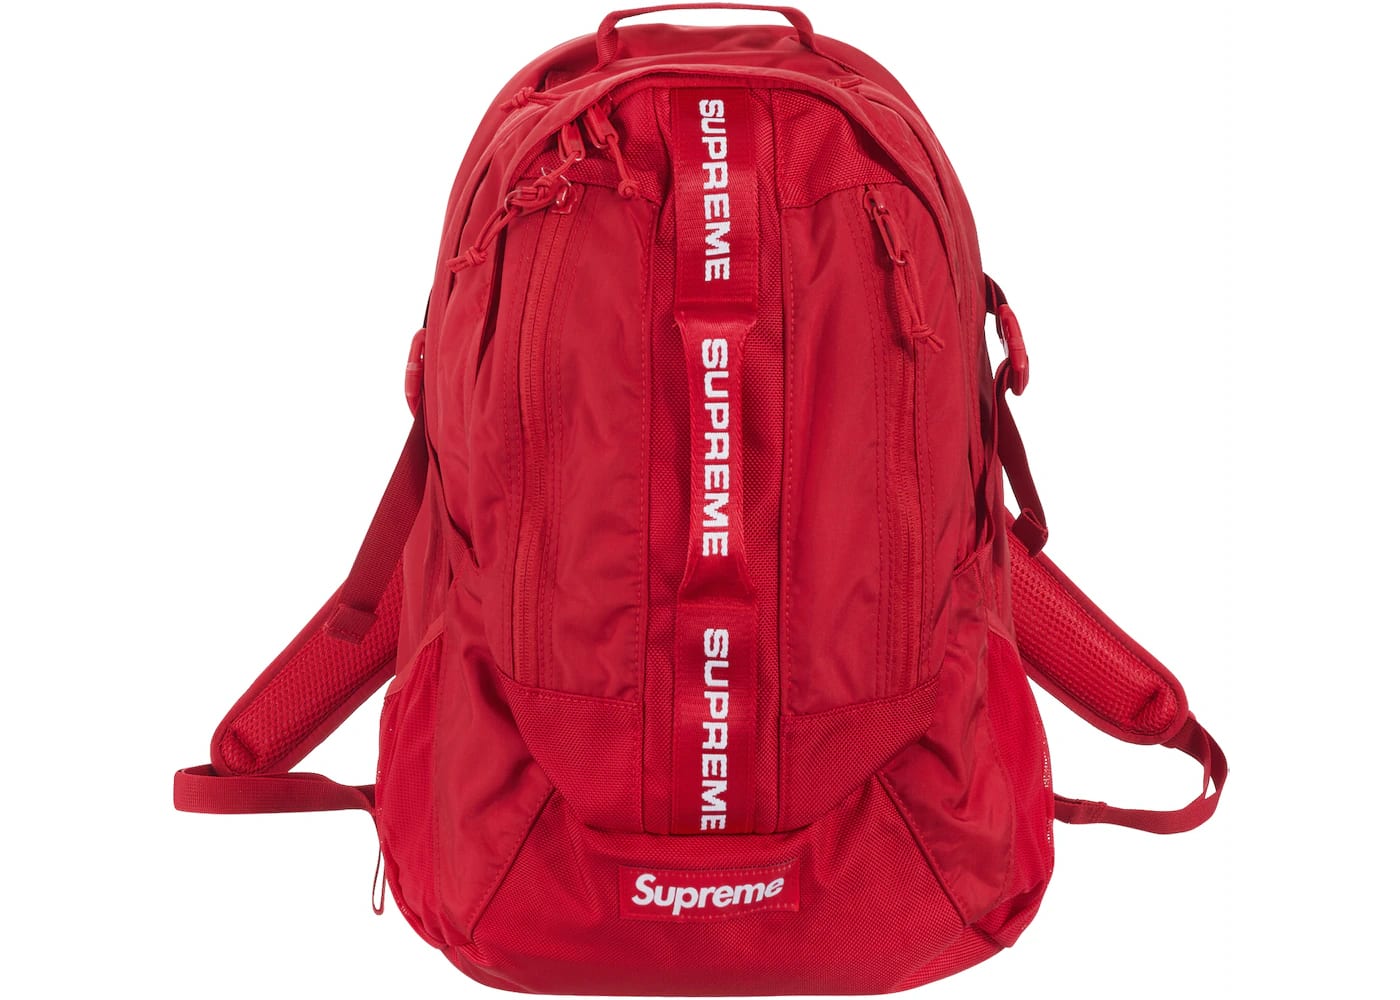 Supreme Field Duffle Bag Red – YankeeKicks Online